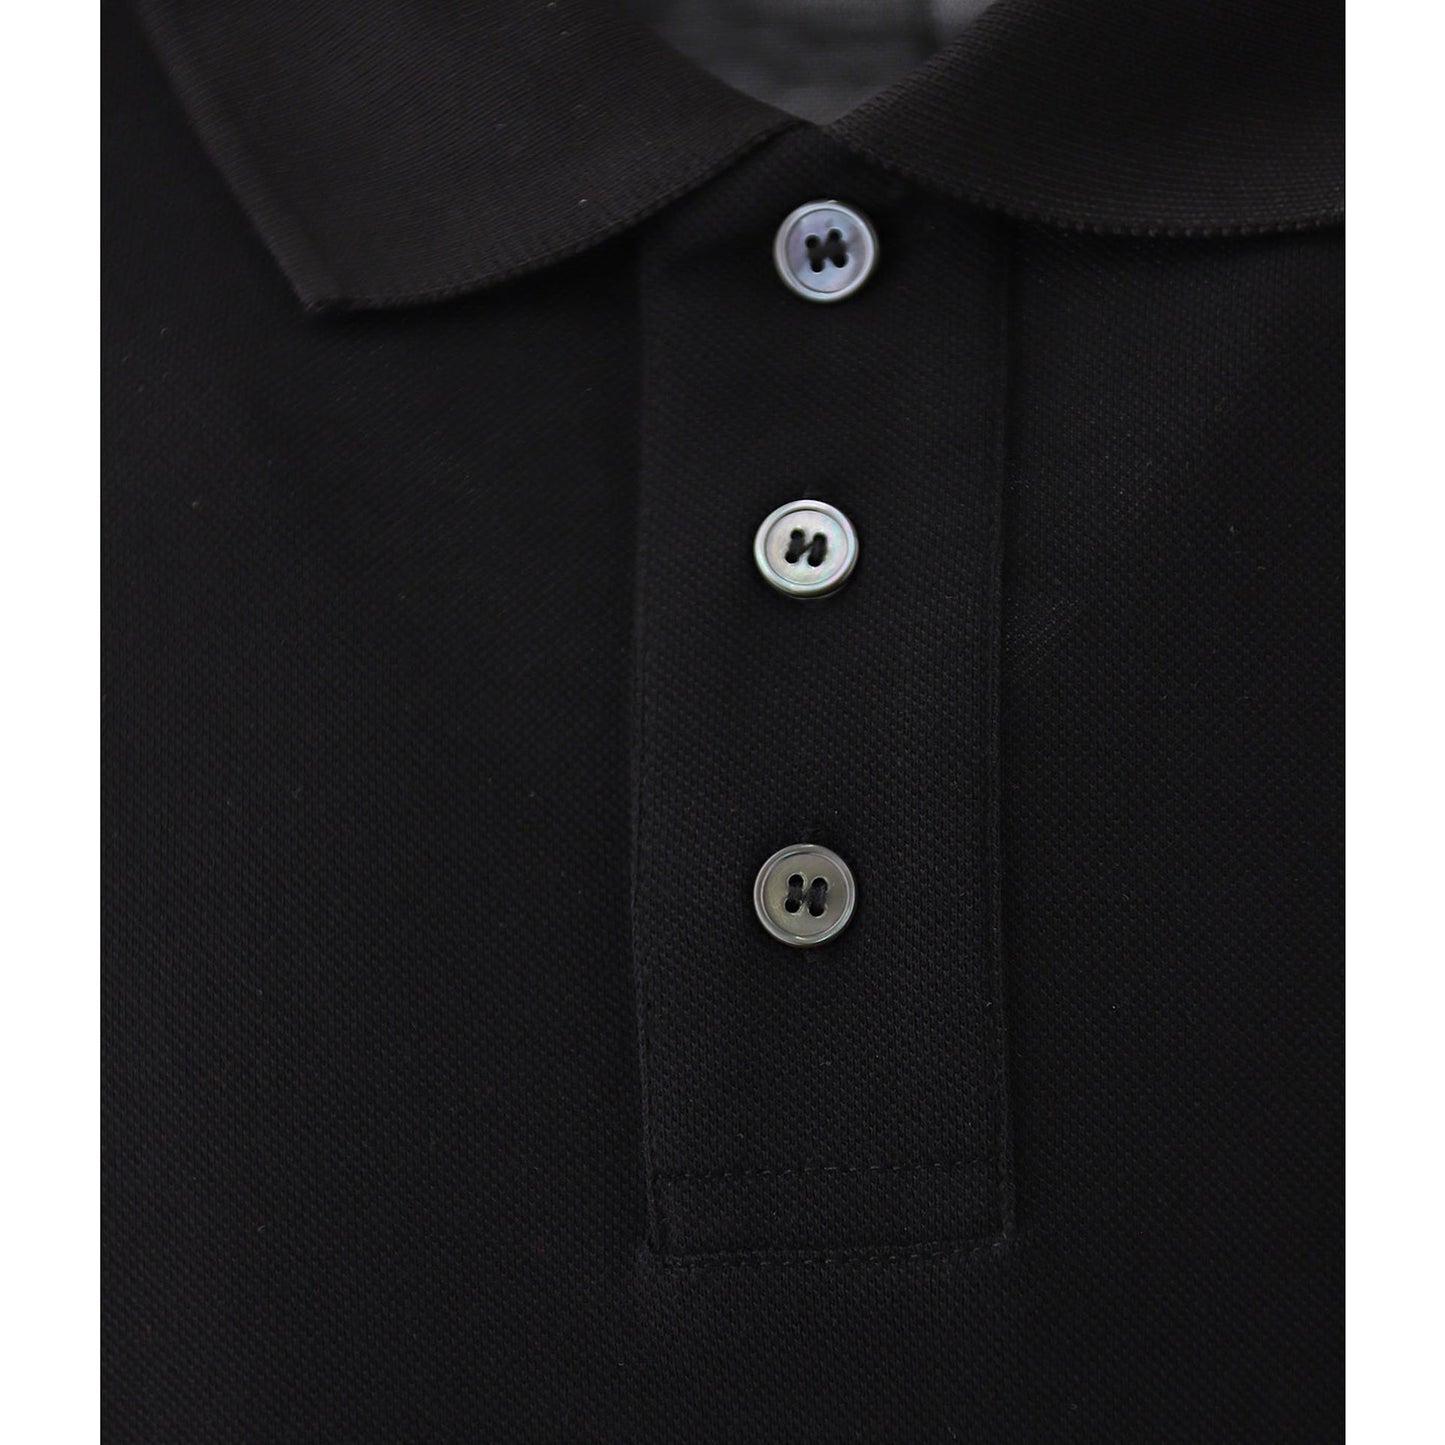 Emporio Armani Long Sleeve Polo - 999 Black - Escape Menswear